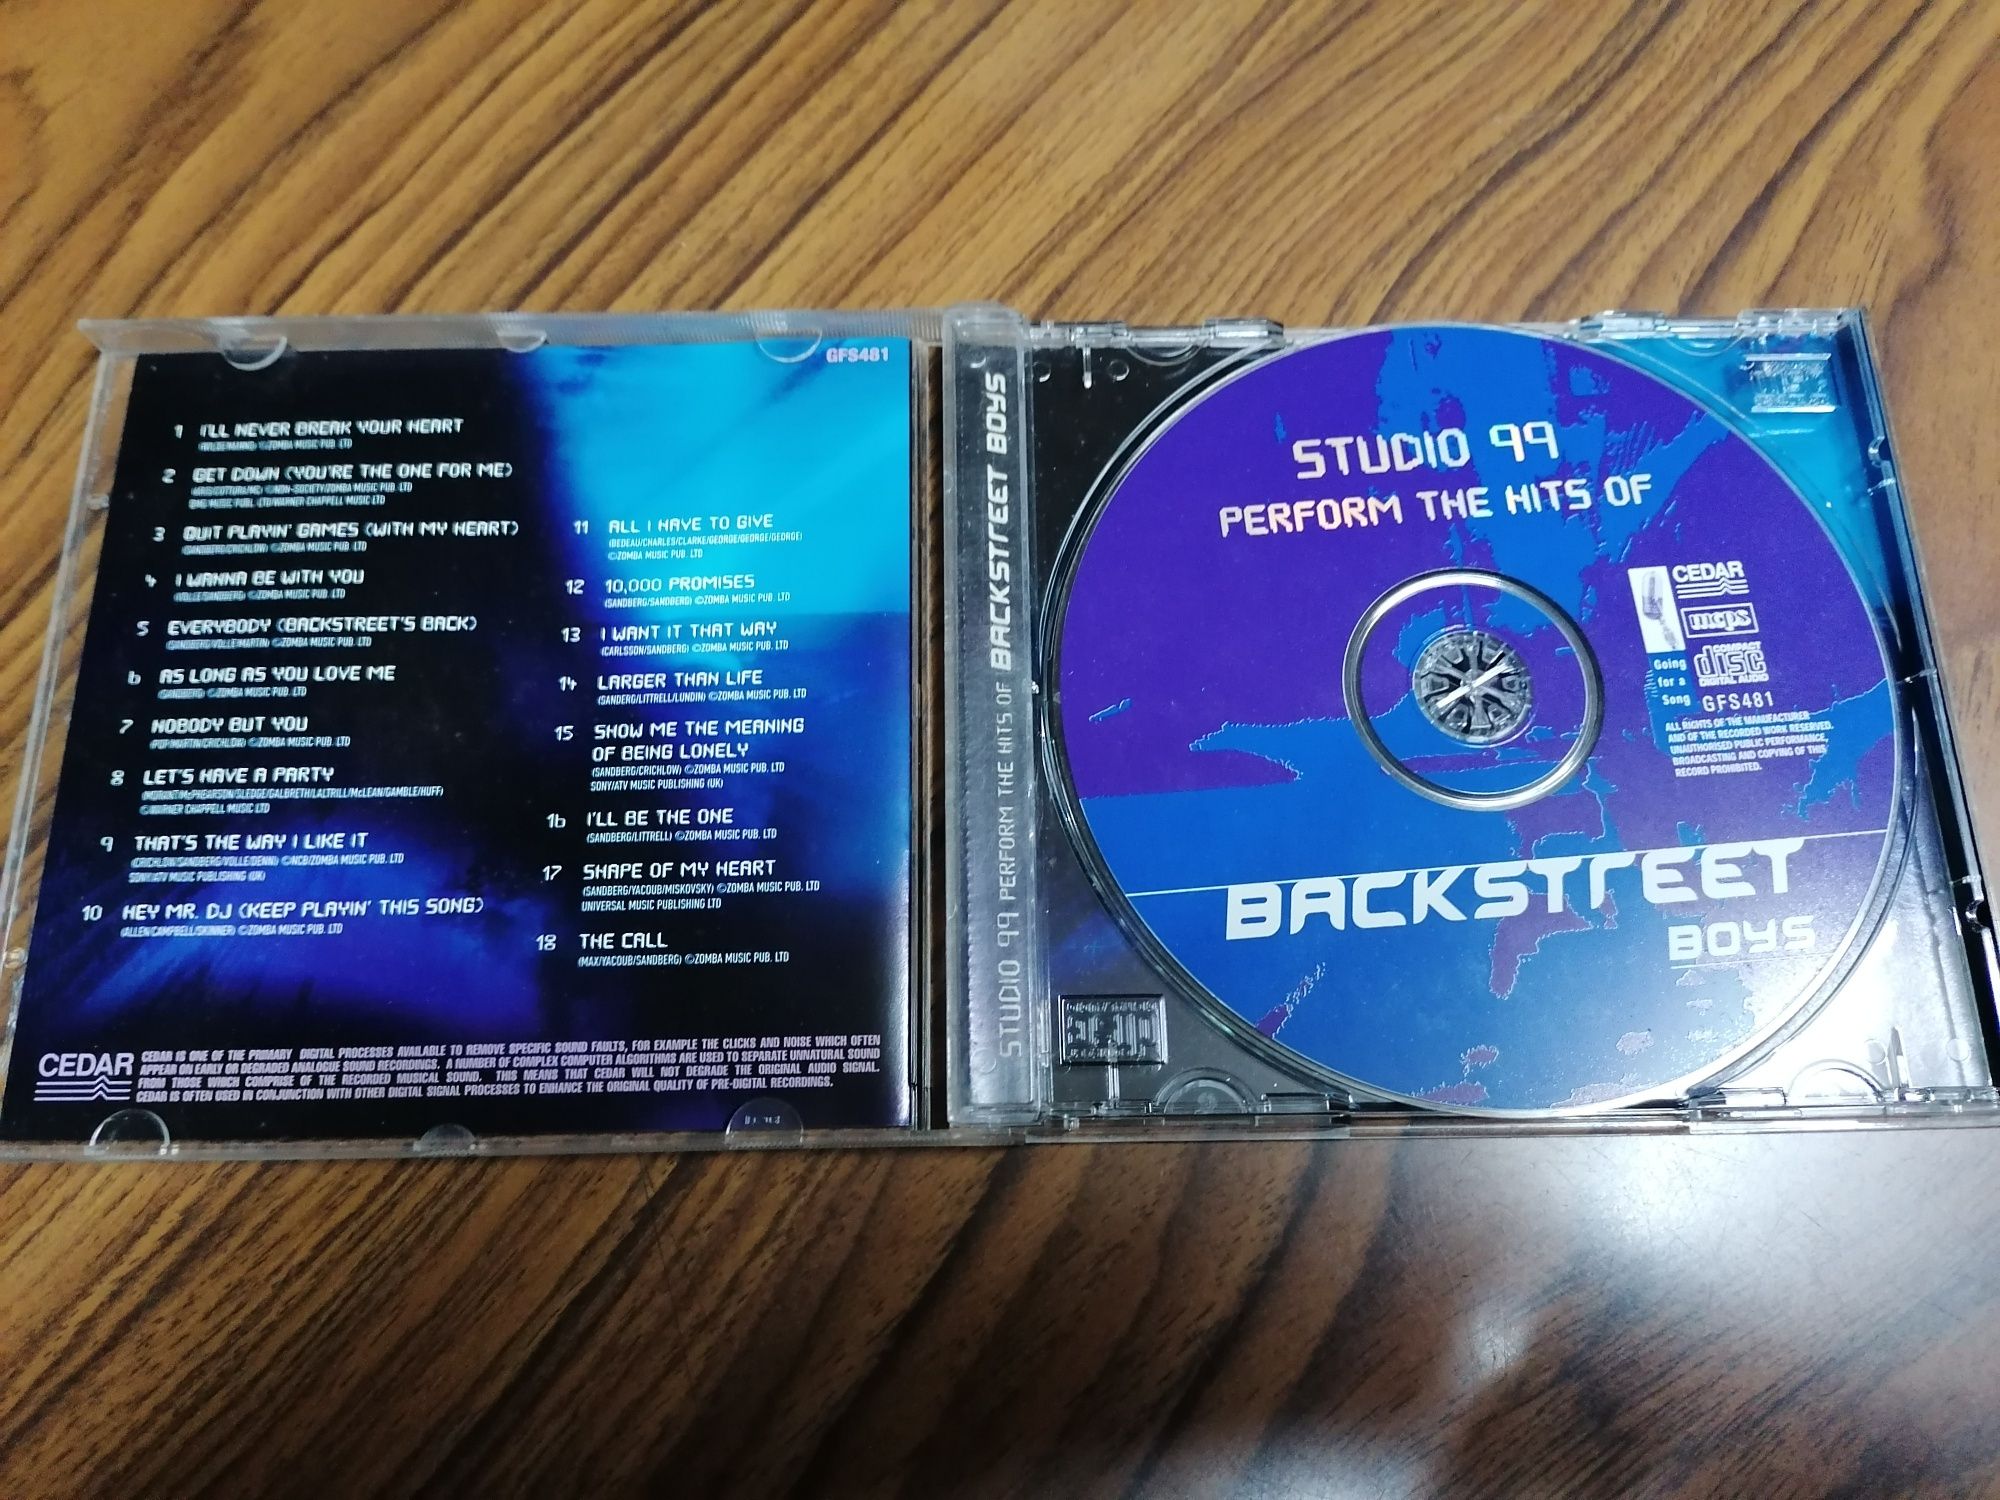 Backstreet boys CD